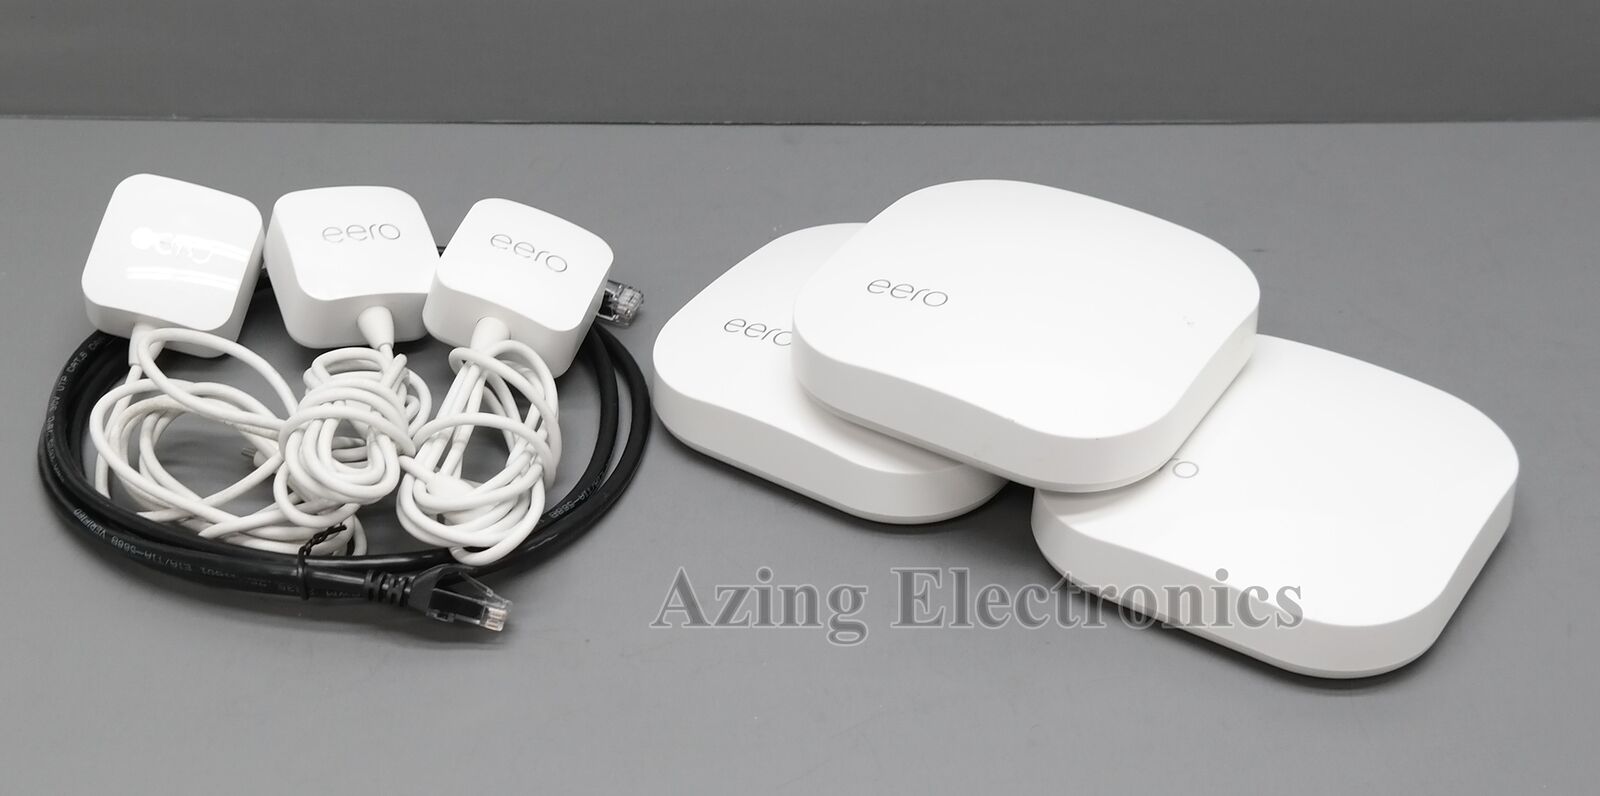 Eero Pro 2nd Gen B010001 Mesh Wi-Fi System (3-pack)